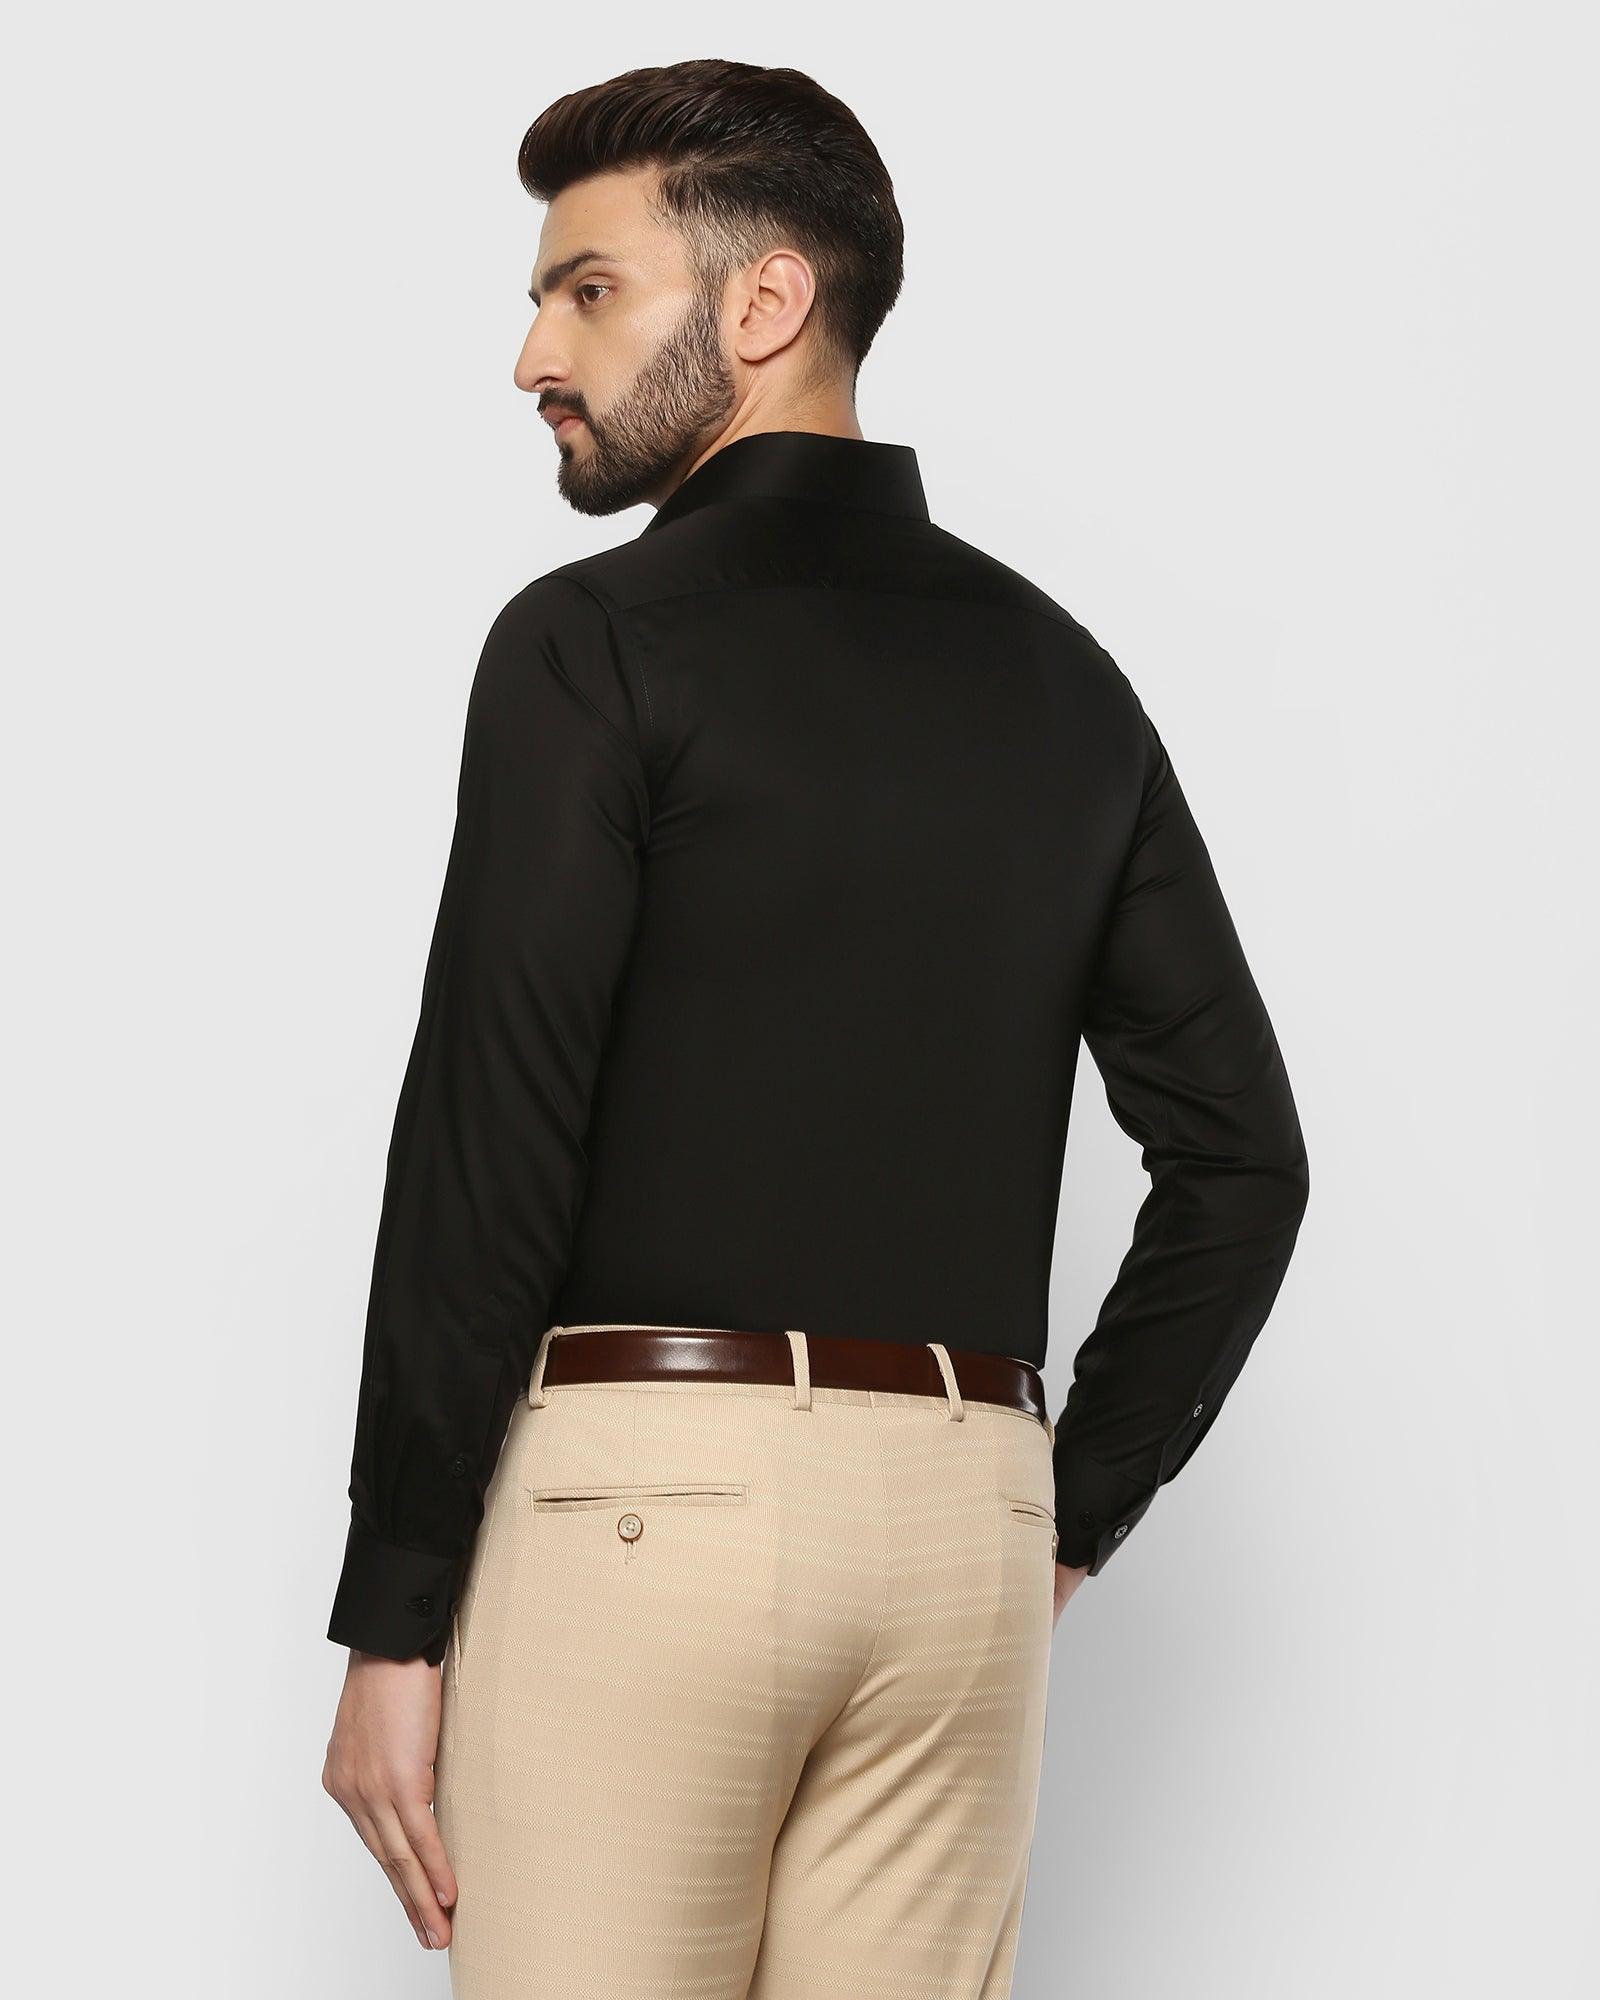 Black Shirt with Brown Pants